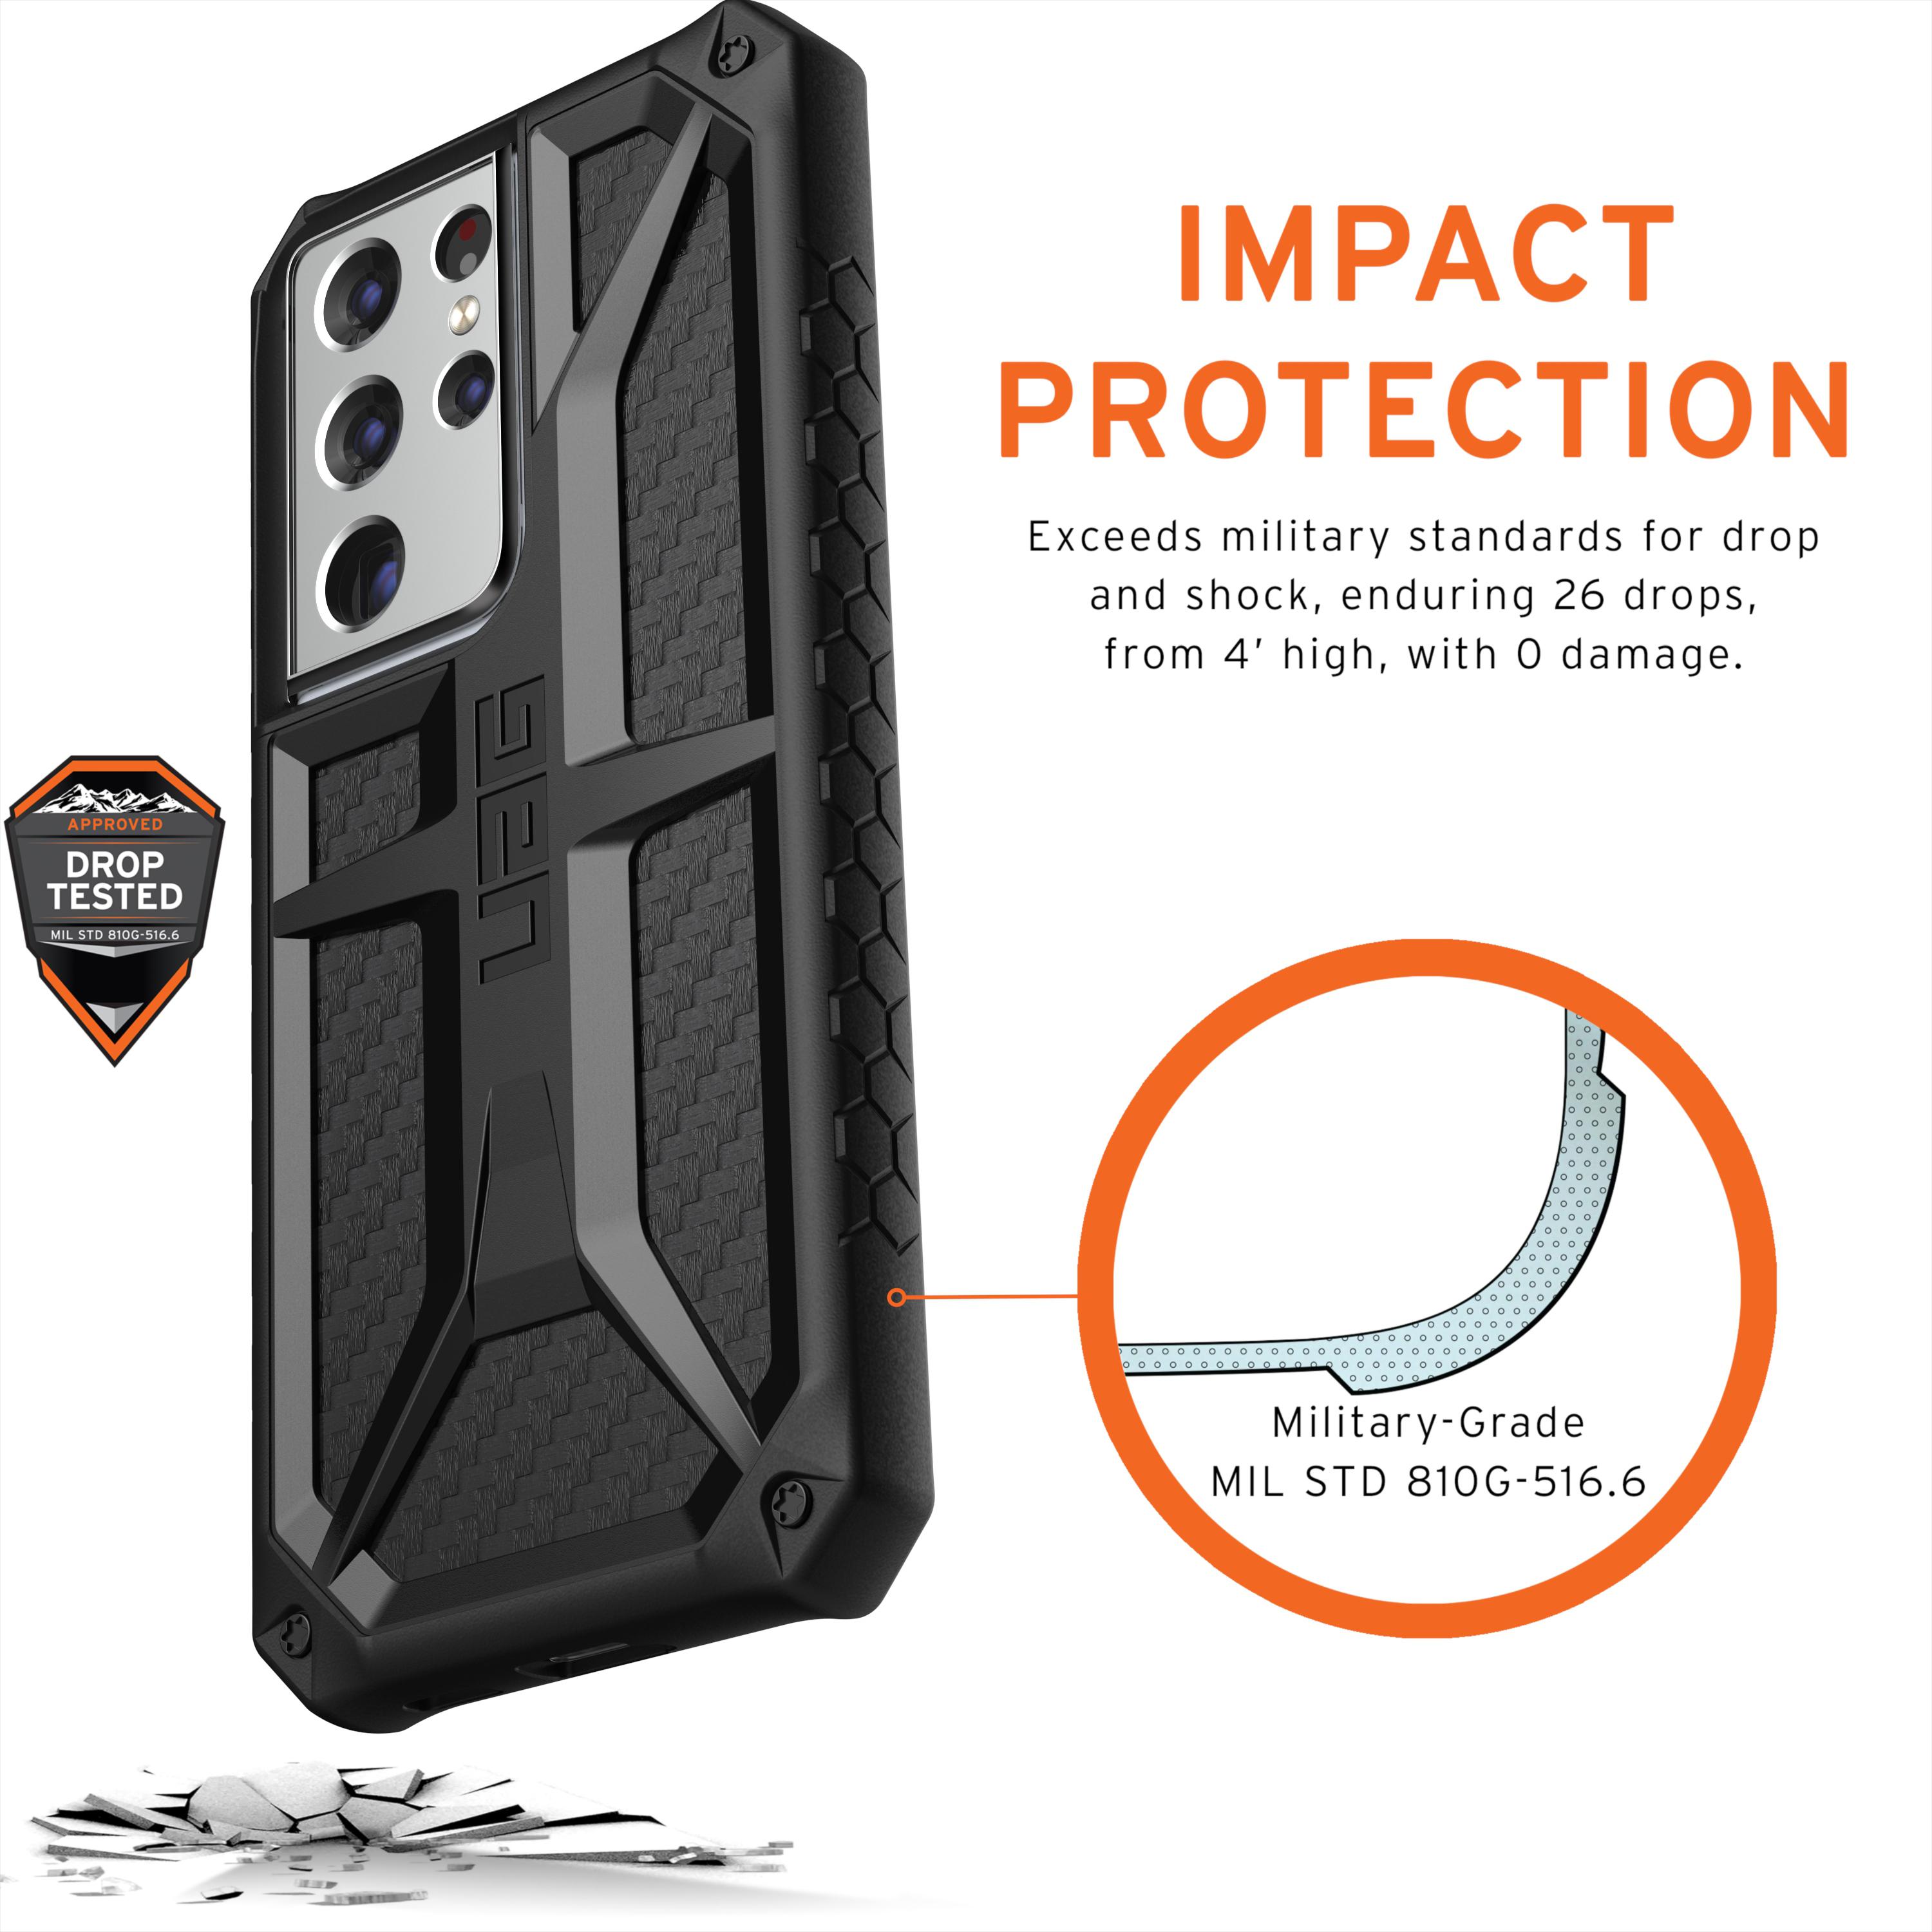 Monarch Series Case Galaxy S21 Ultra Carbon Fiber